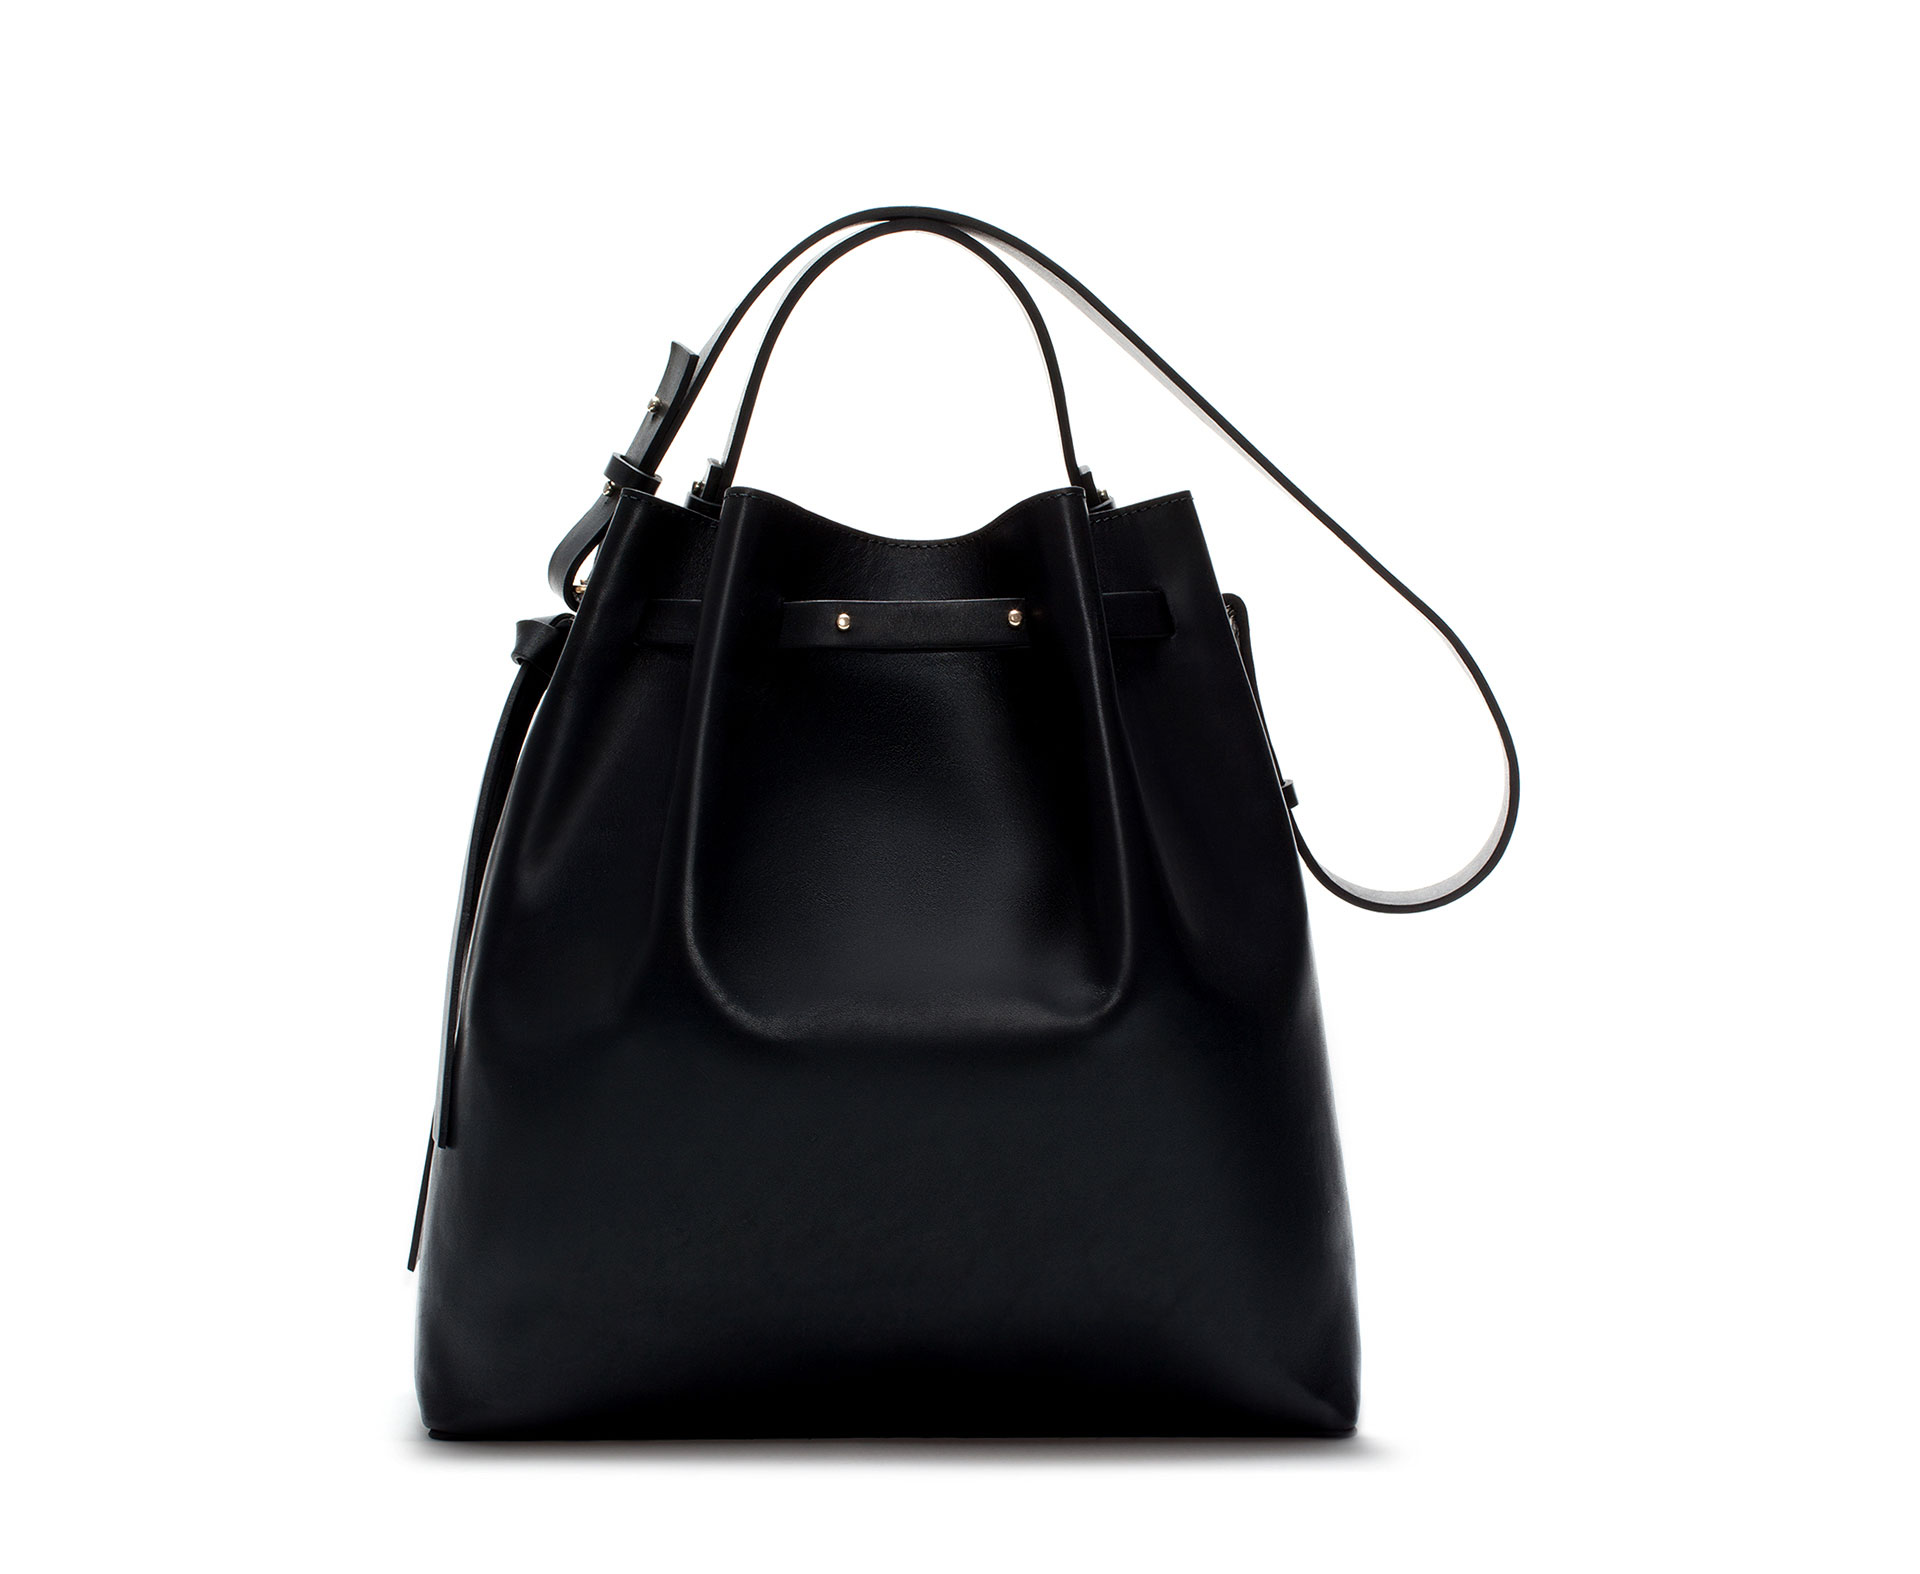 Zara Limited Editionminimal Leather Bucket Bag in Black | Lyst